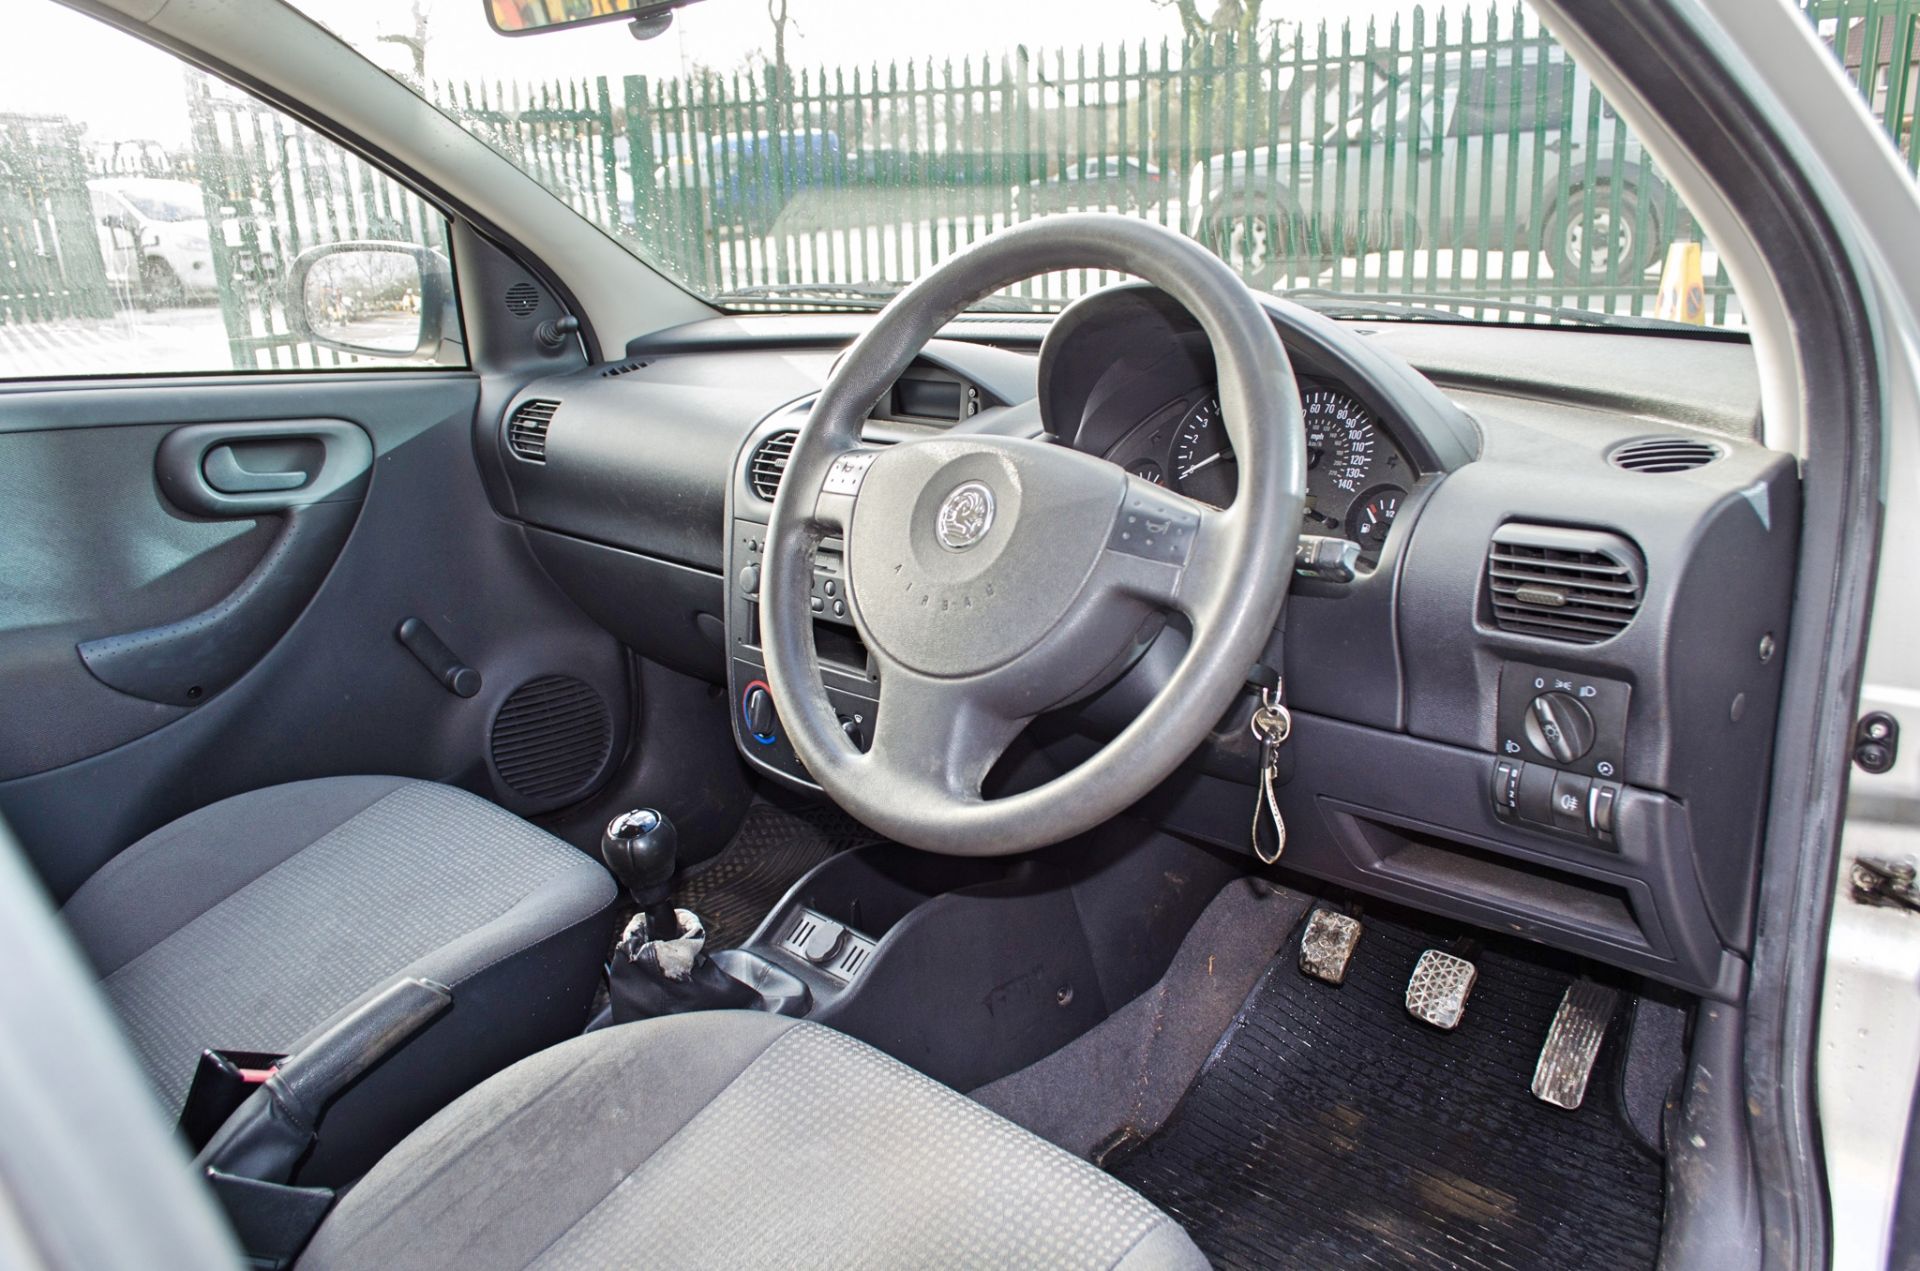 2003 Vauxhall Corsa GLS 16V 1199cc 5 door hatchback - Image 32 of 57